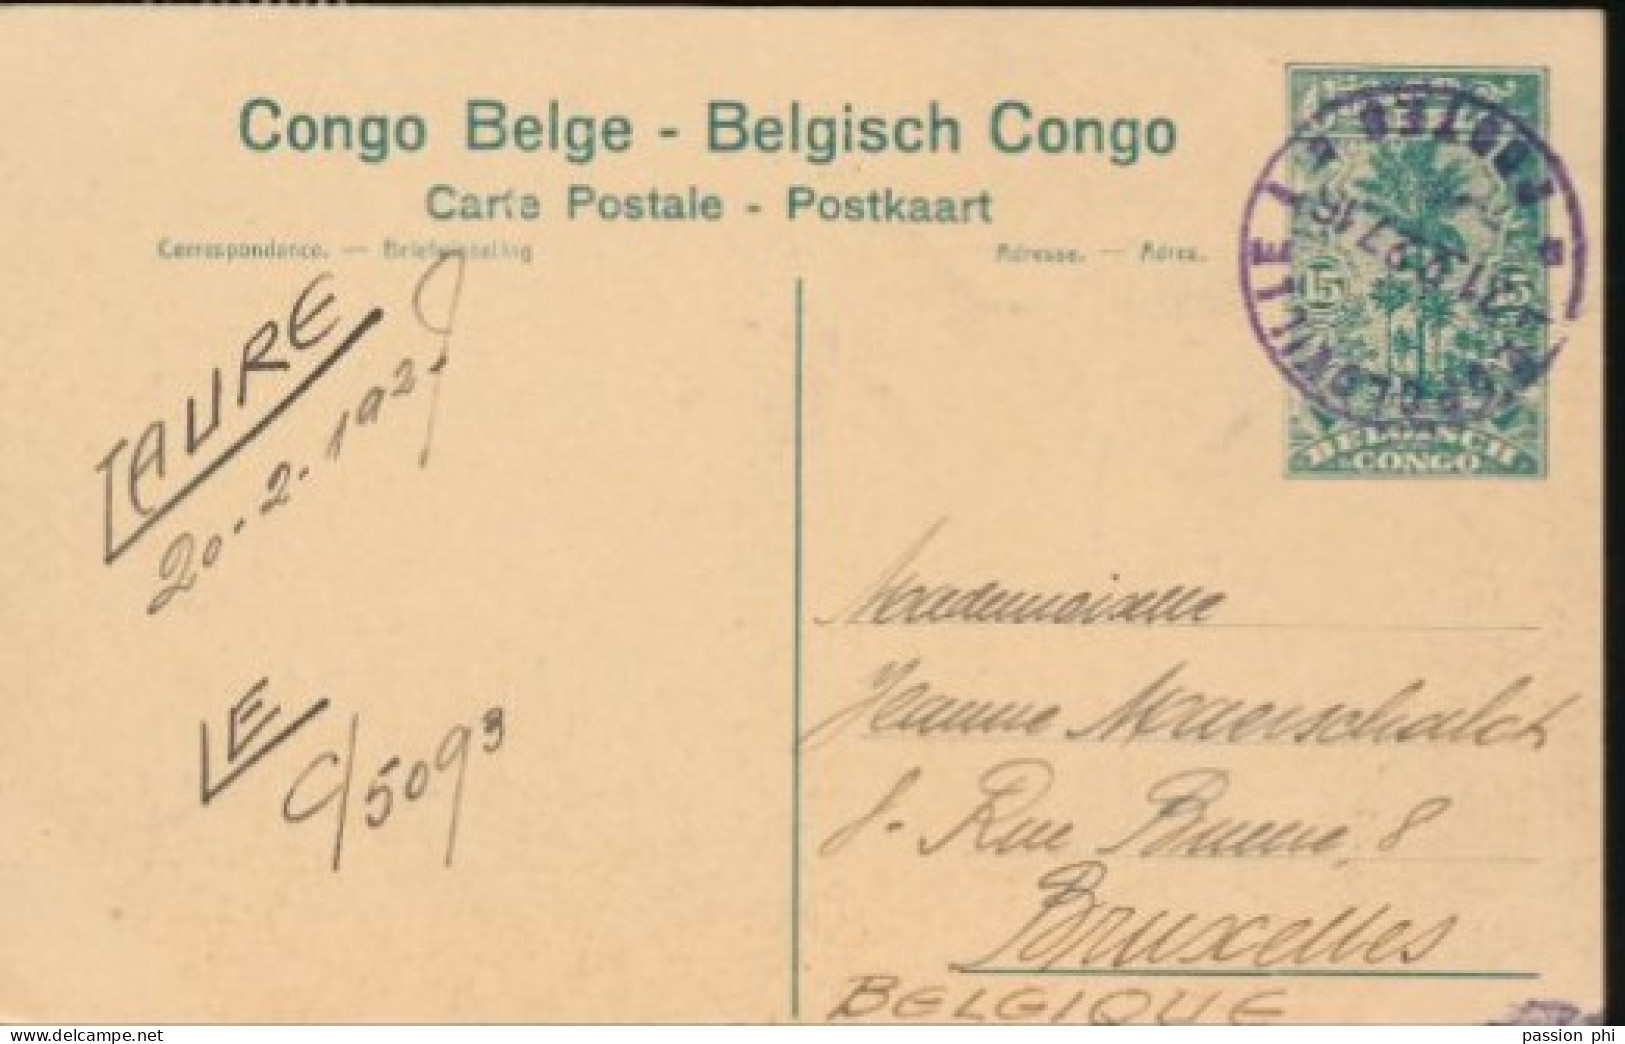 BELGIAN CONGO PPS SBEP 61 VIEW 101 USED - Enteros Postales